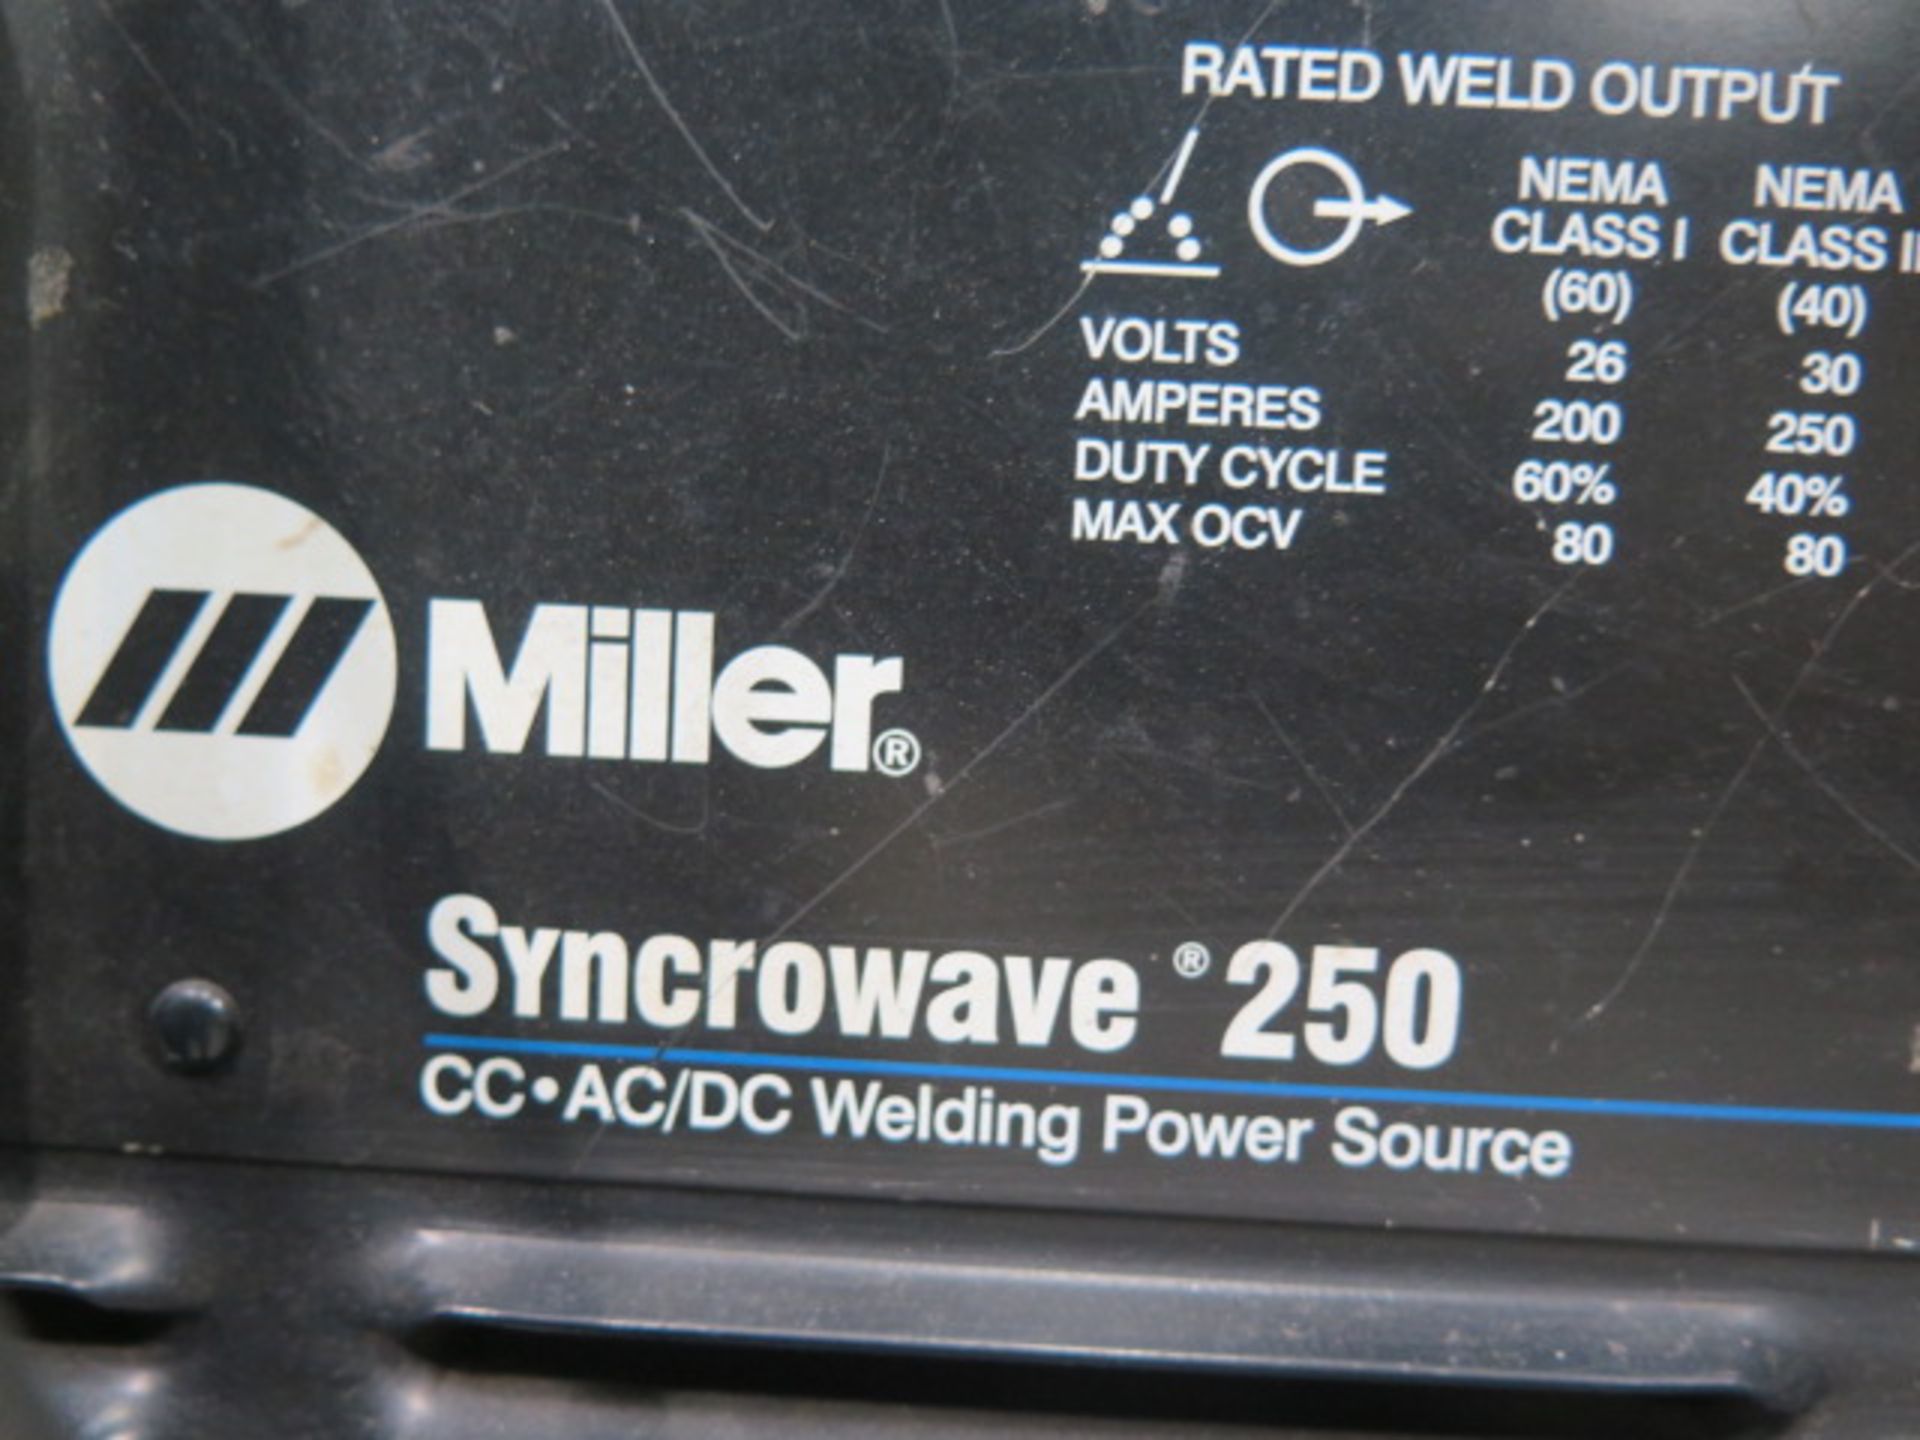 Miller Syncrowave 250 CC-AC/DC Arc Welding Power Source s/n KJ285628 w/ Cooler Cart (NO TANK) - Image 6 of 6